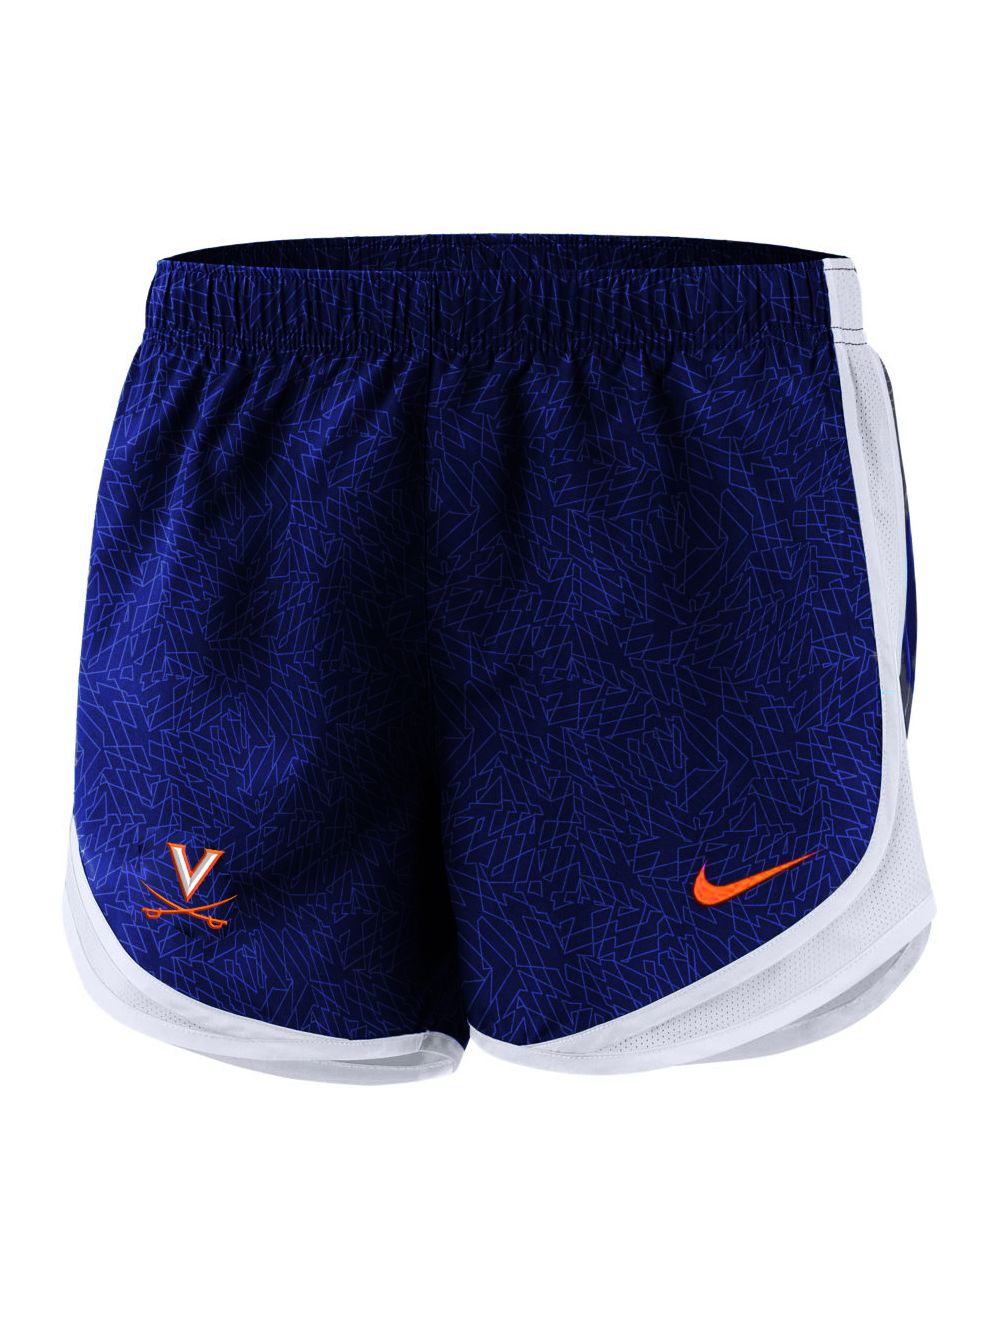 Regan Diligencia Nuevo significado Nike Navy and White Tempo Shorts - Mincer's of Charlottesville